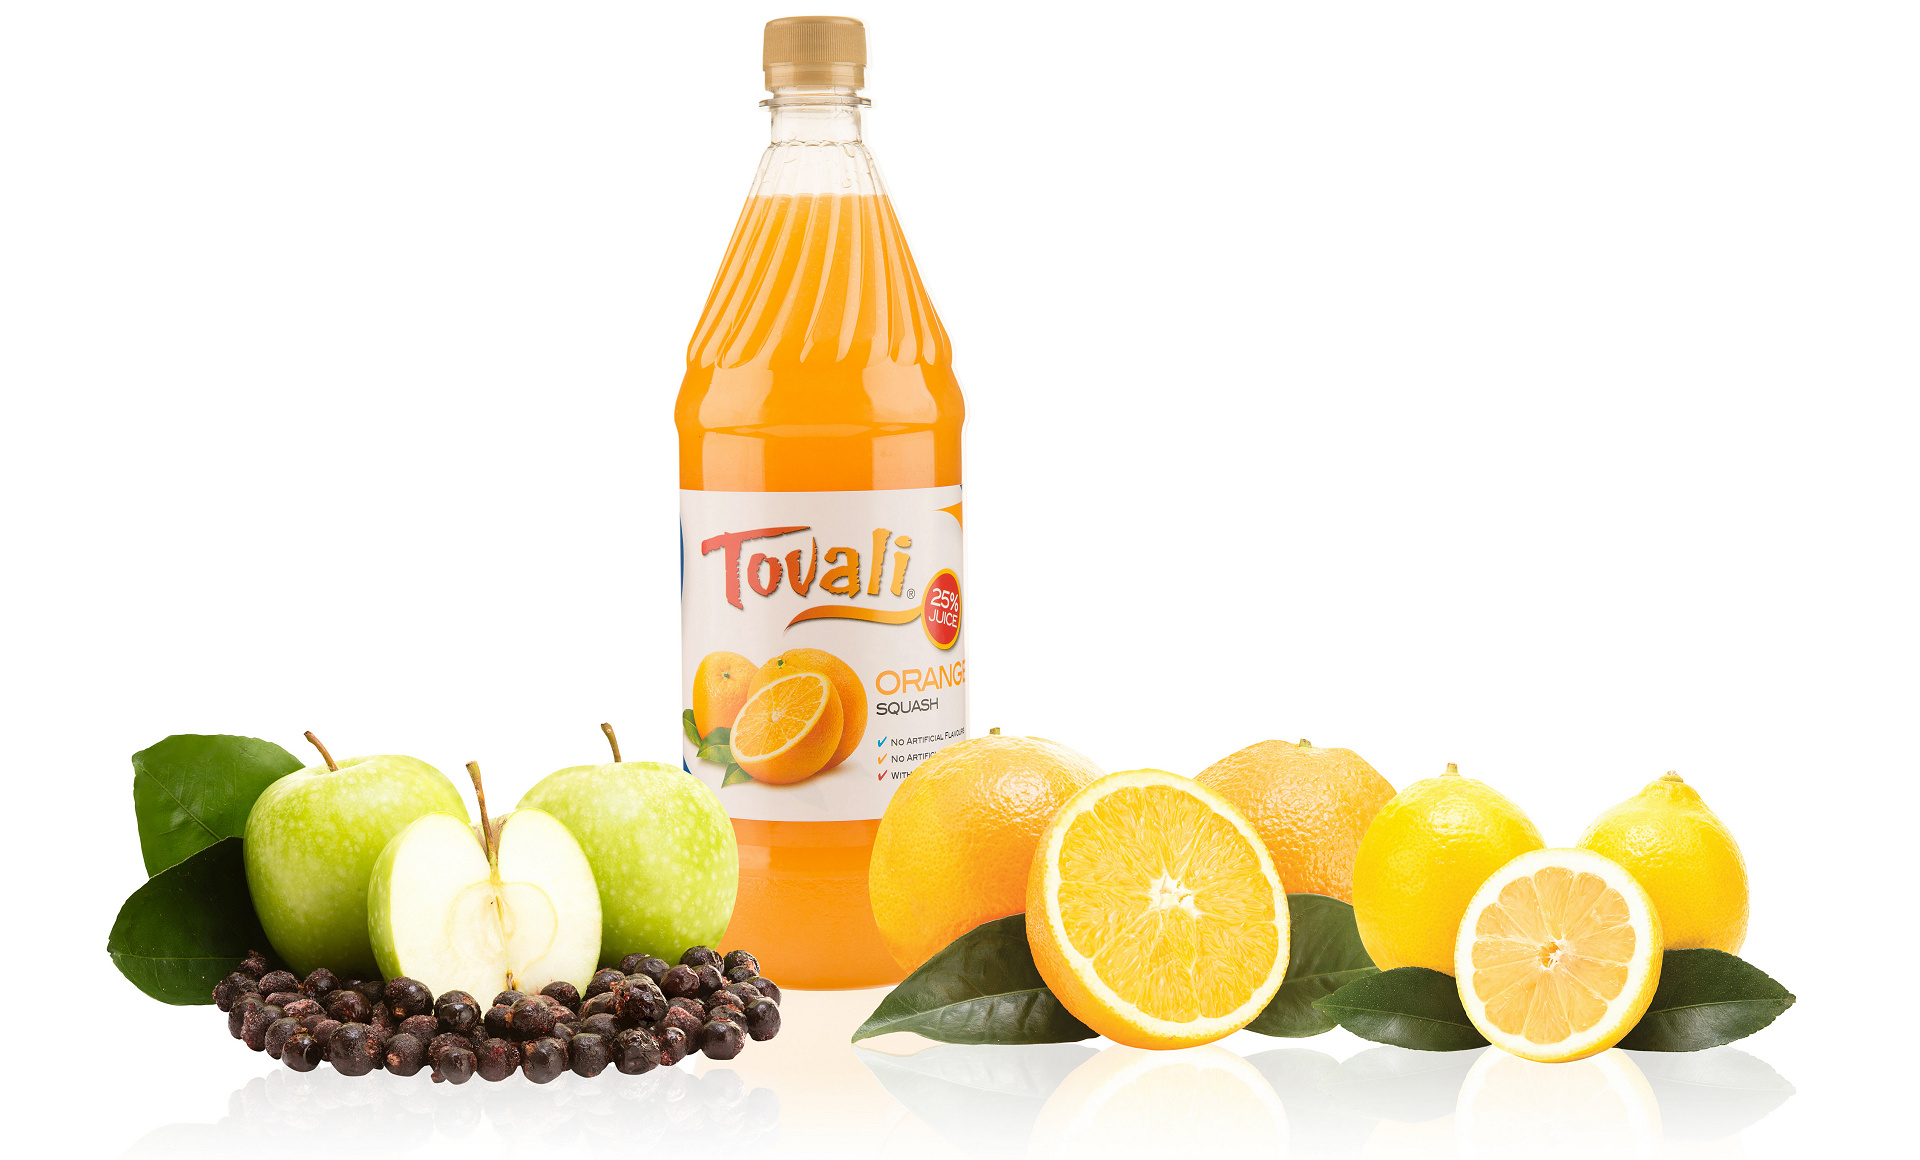 Tovali, Quality Fruit Drinks since 1937